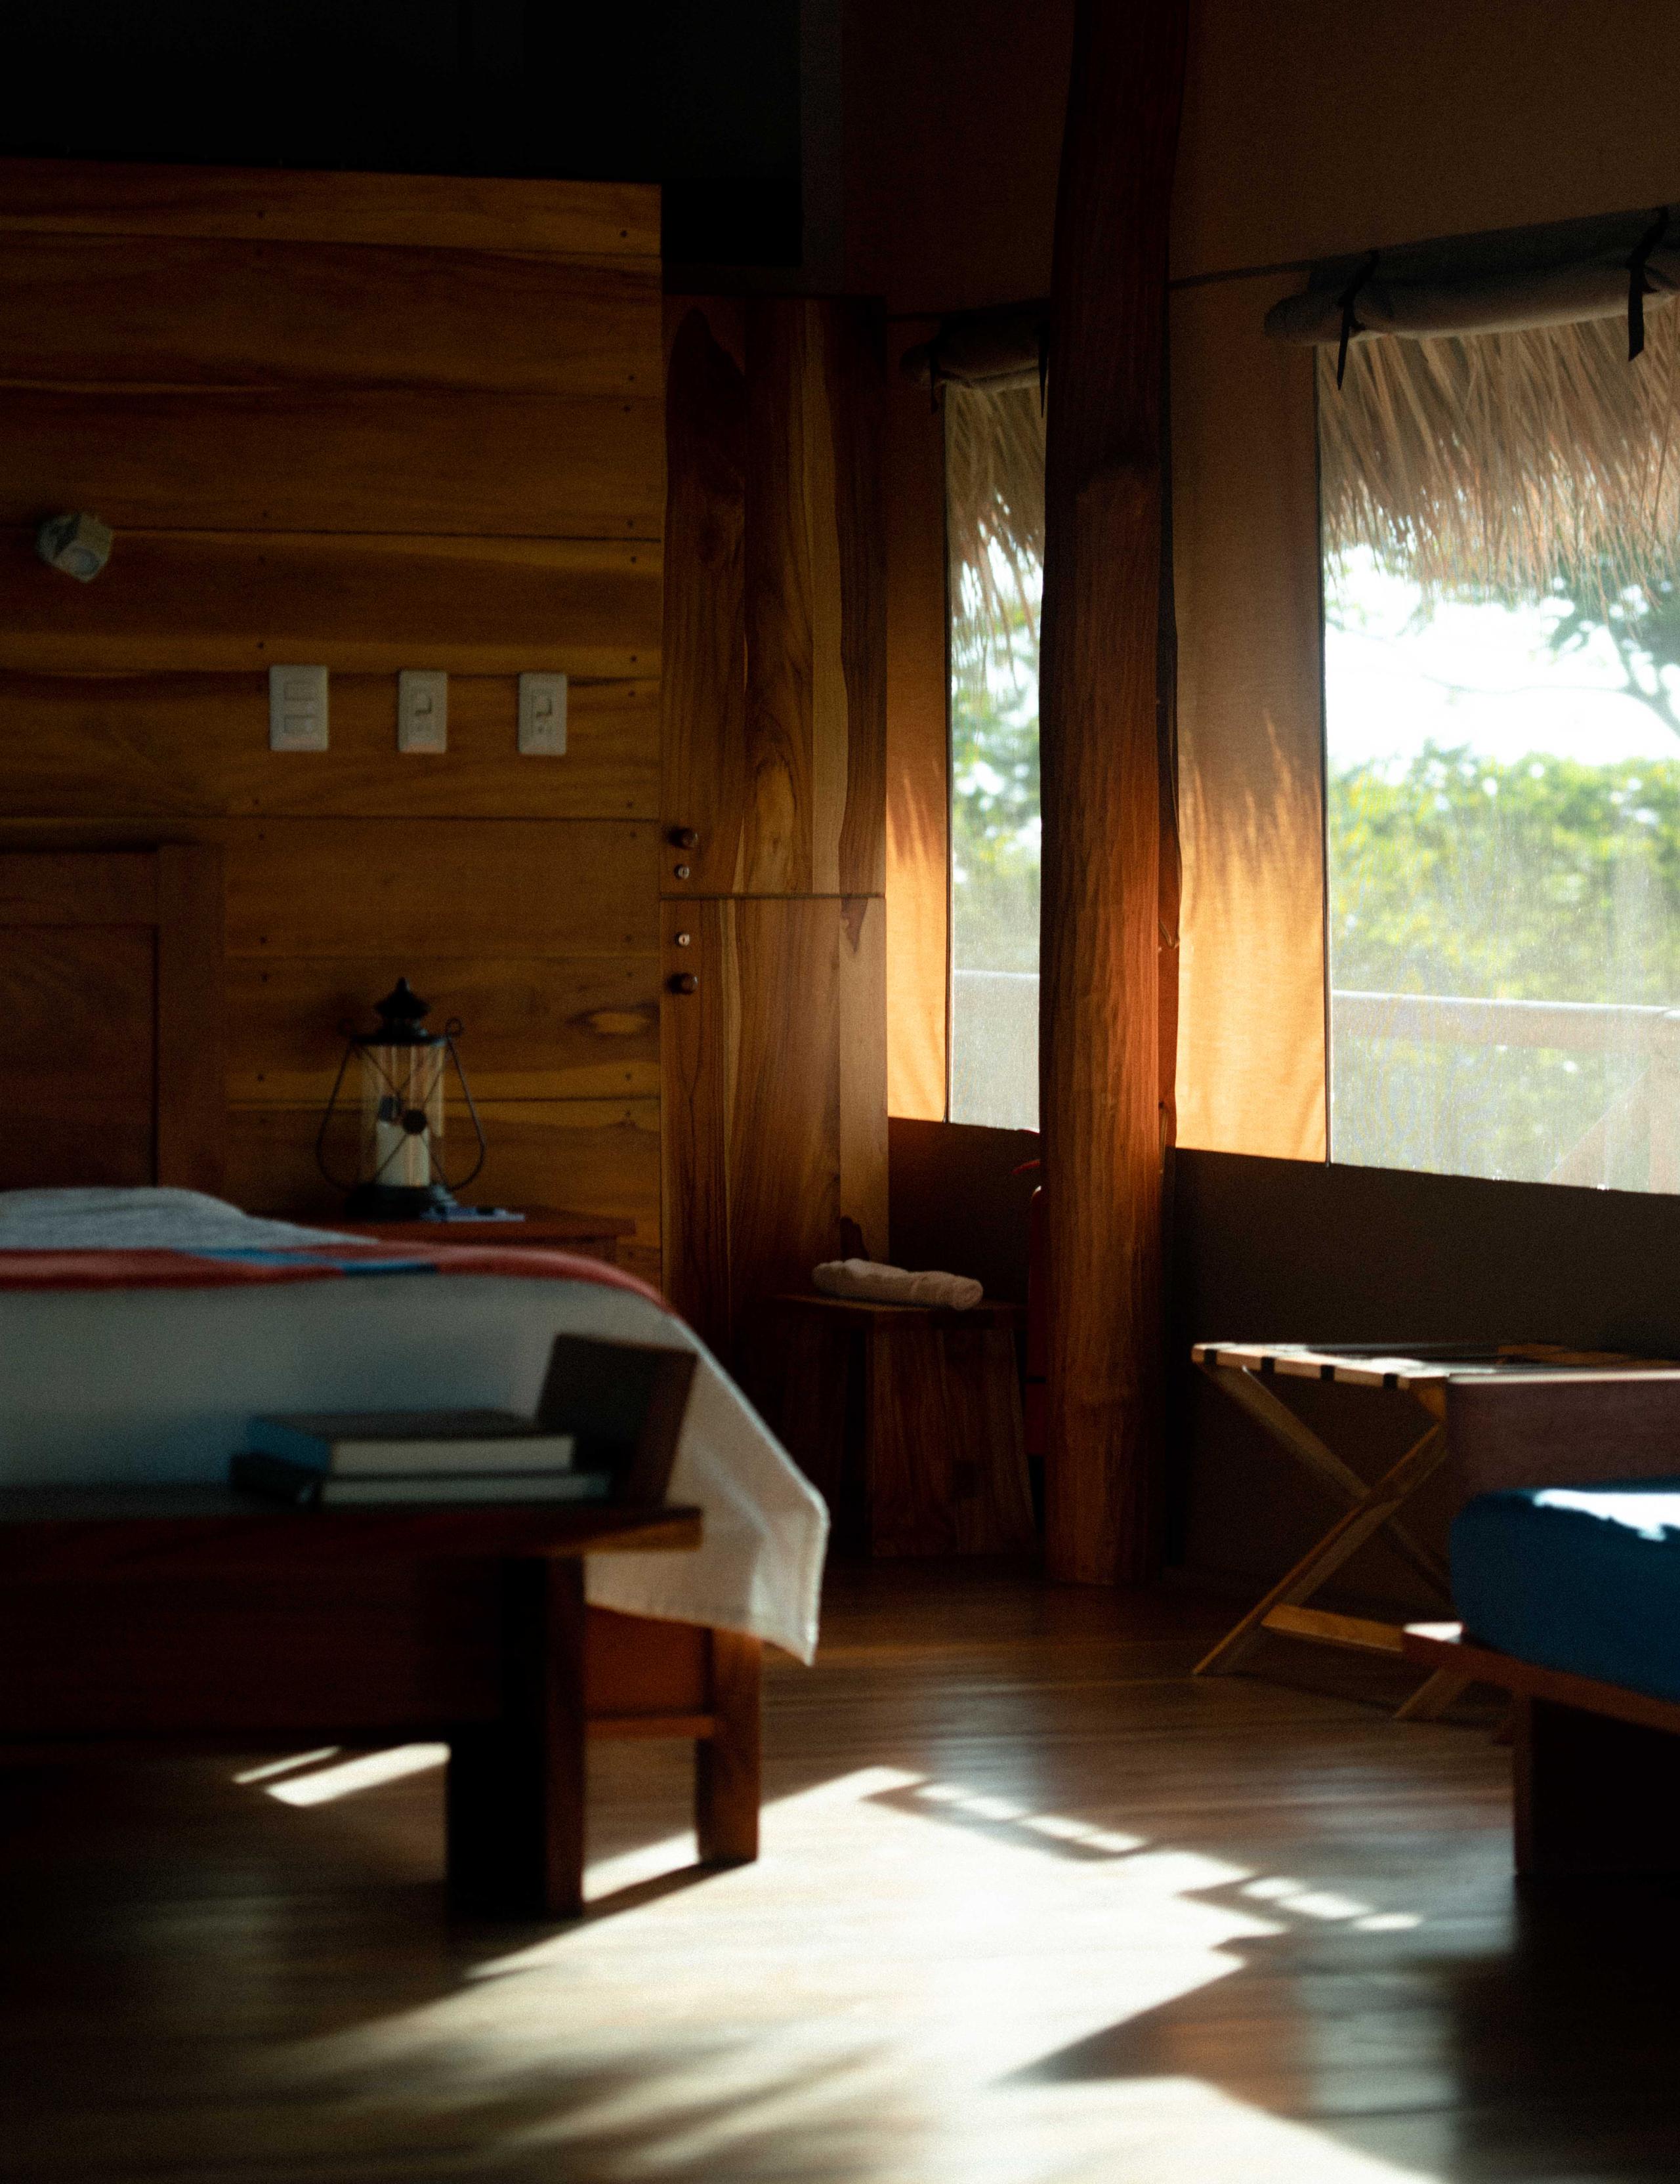 Hotel room in Costa Rica